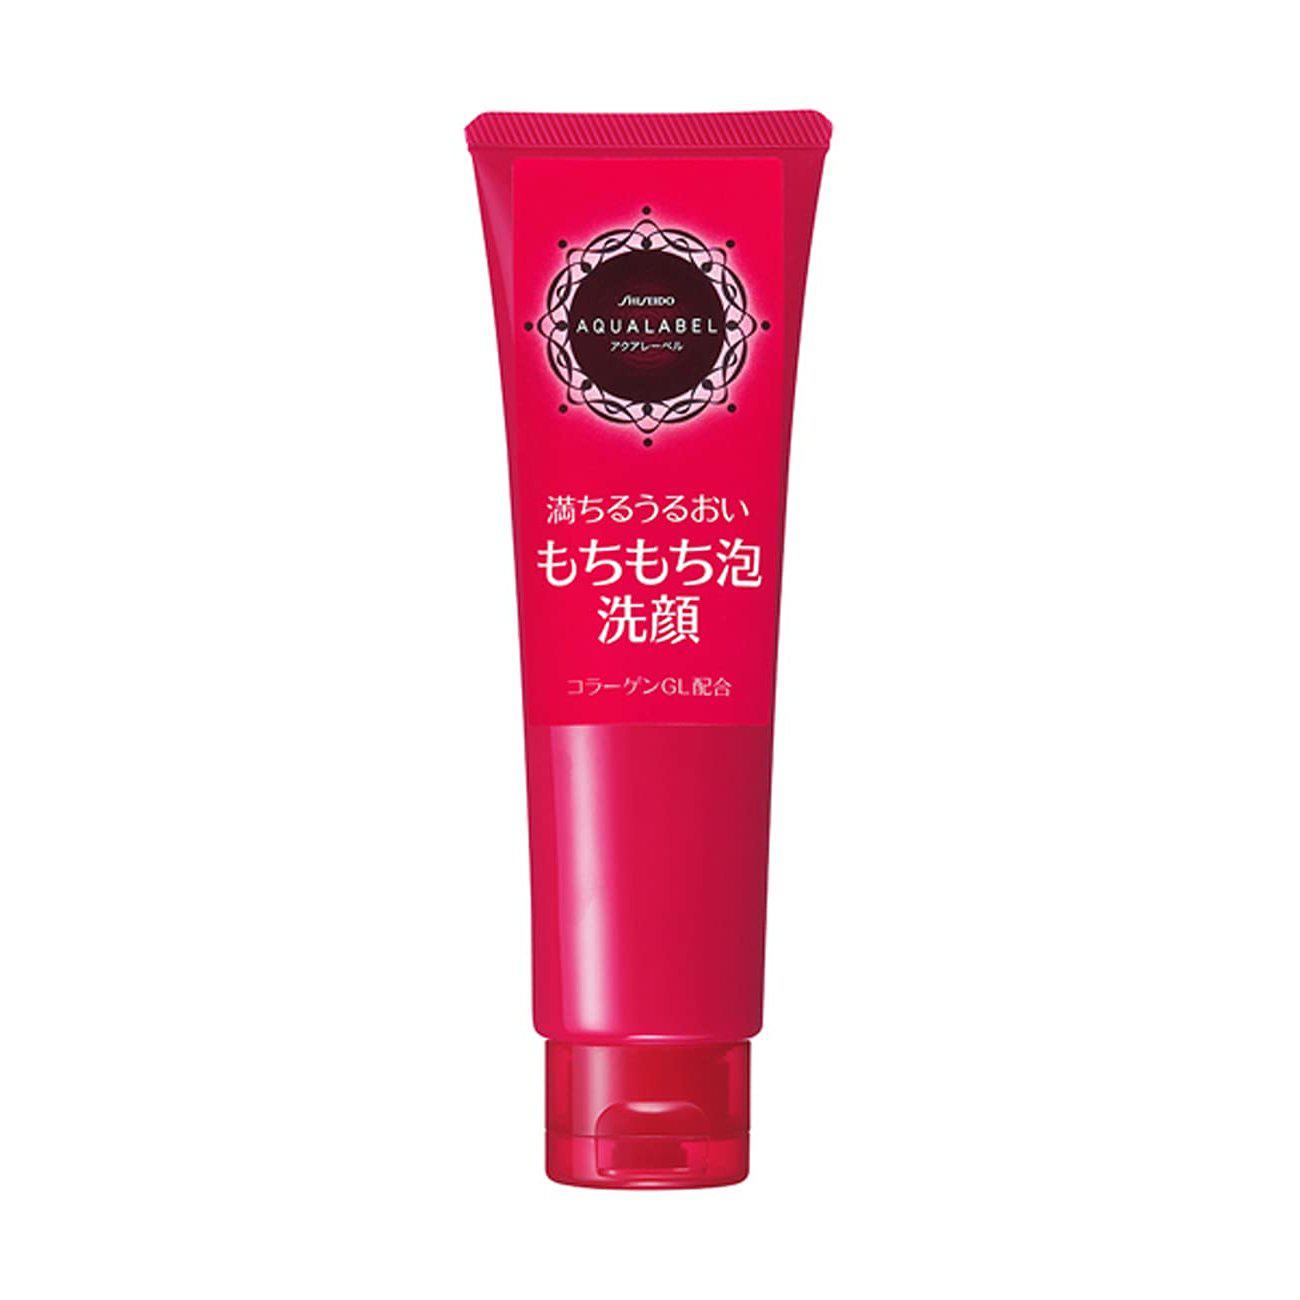 P-1-AQUA-WASHFO-110-Shiseido Aqualabel Milky Mousse Foam Facial Cleanser For Clogged Pores 130g-2023-10-16T07:53:25.jpg